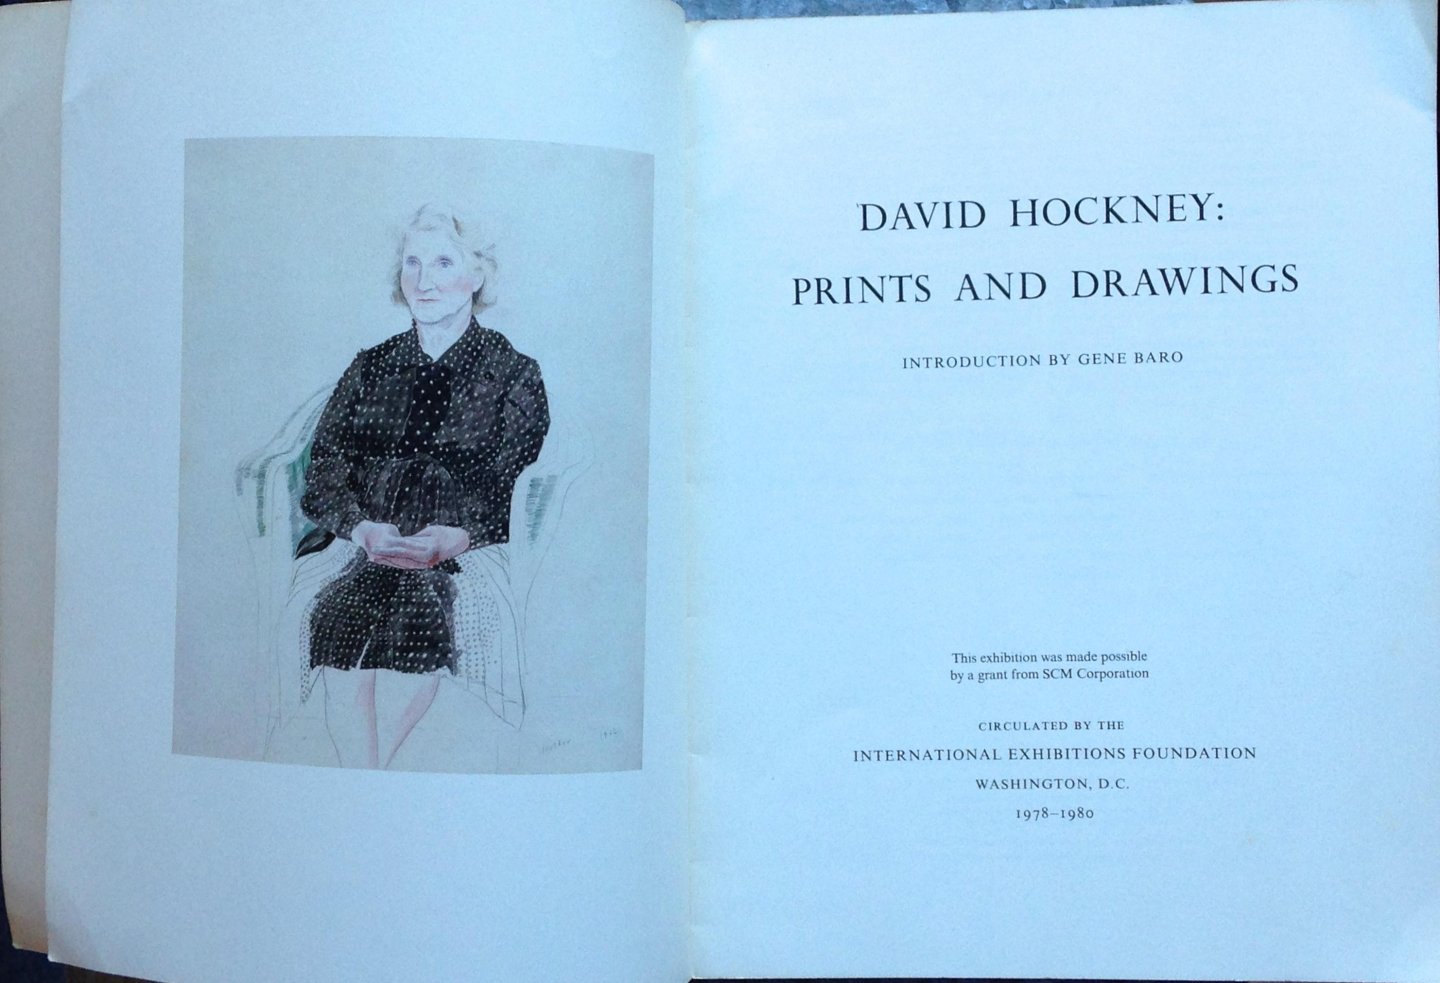 Hockney, David - introduction by Gene Baro - David Hockney: Prints and Drawings